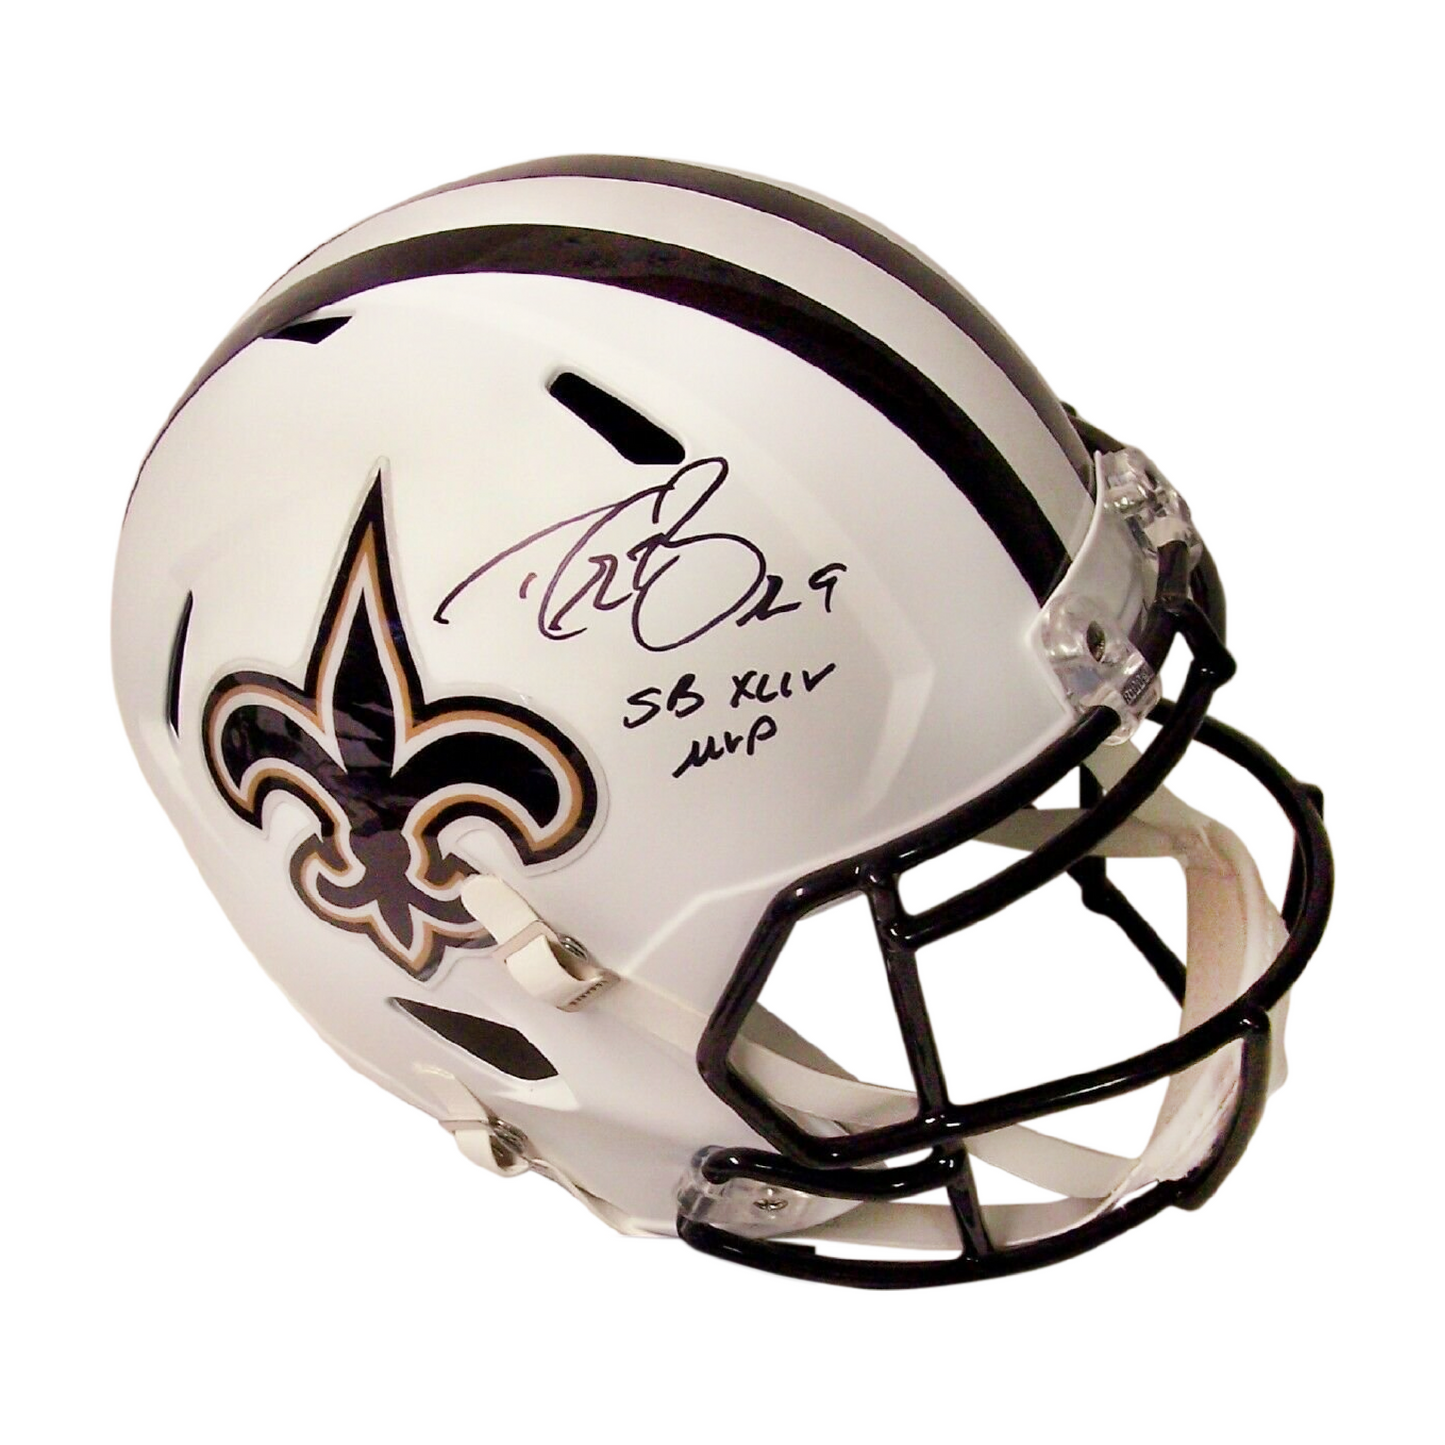 Drew Brees Autographed Hand Signed New Orleans Saints Flat White Speed Full Size Replica Football Helmet - SB XLIV MVP Inscription - BAS Authentication